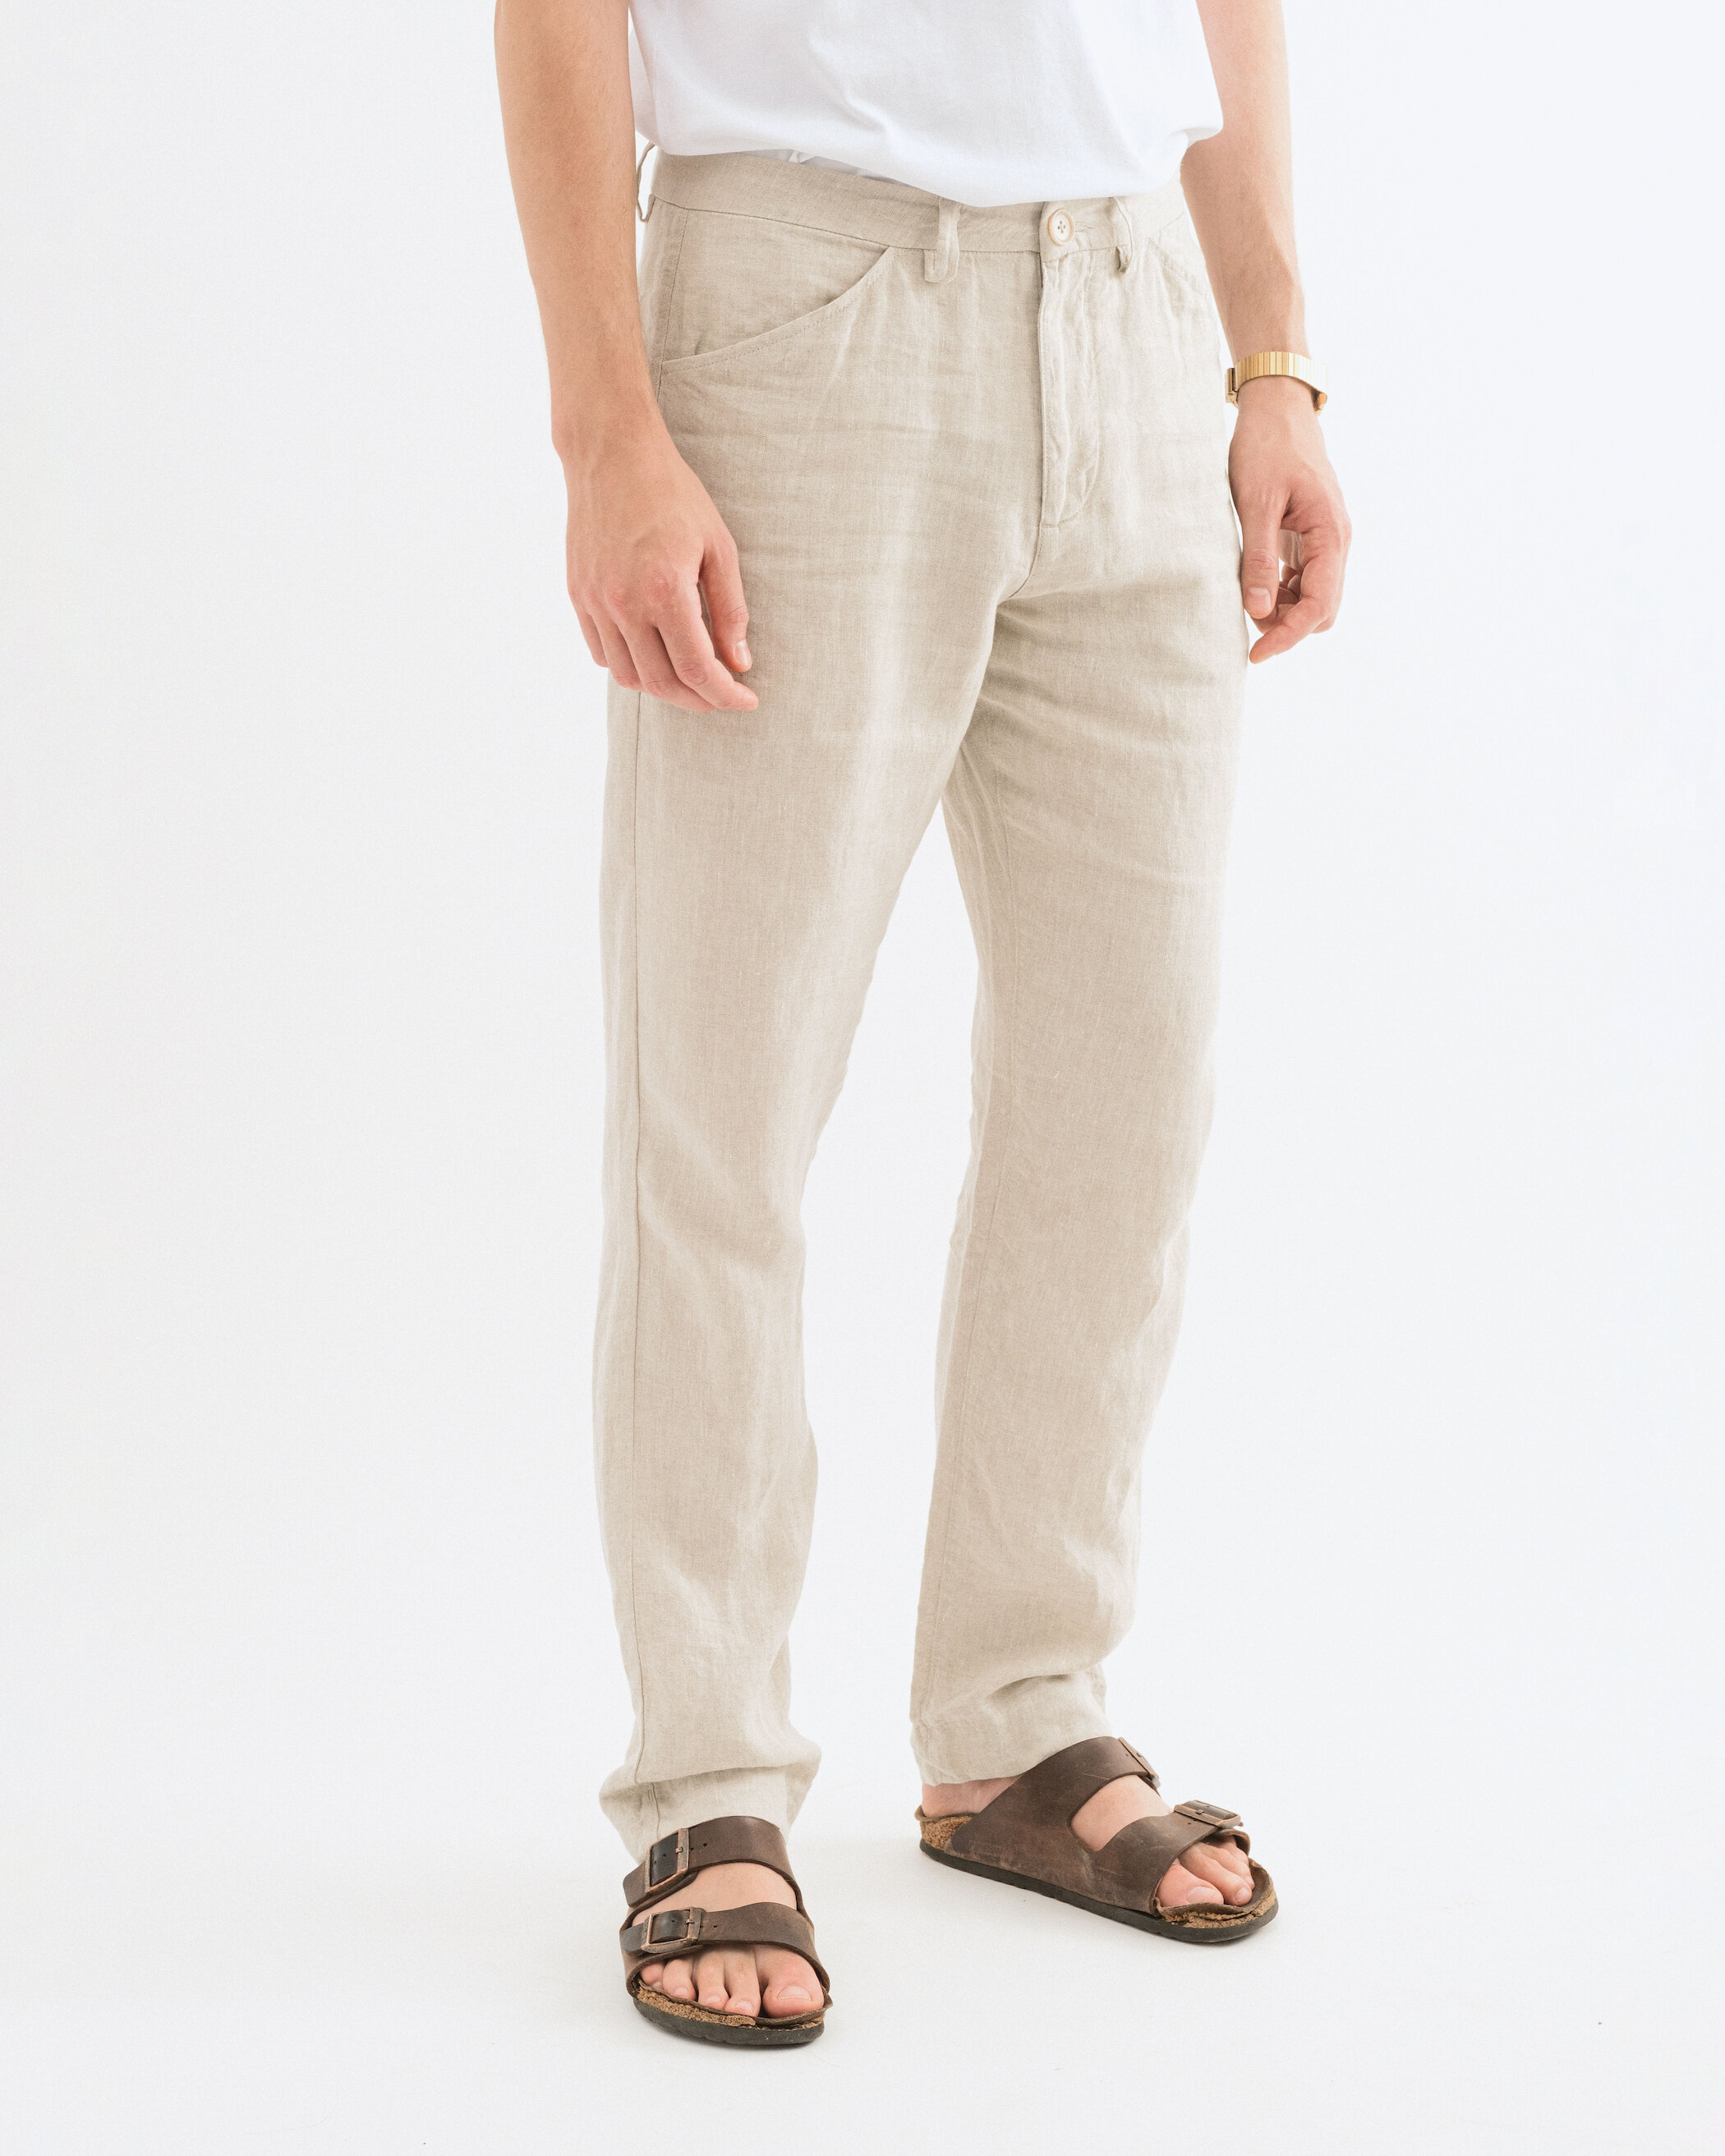 Glein - Linen Pants - undyed